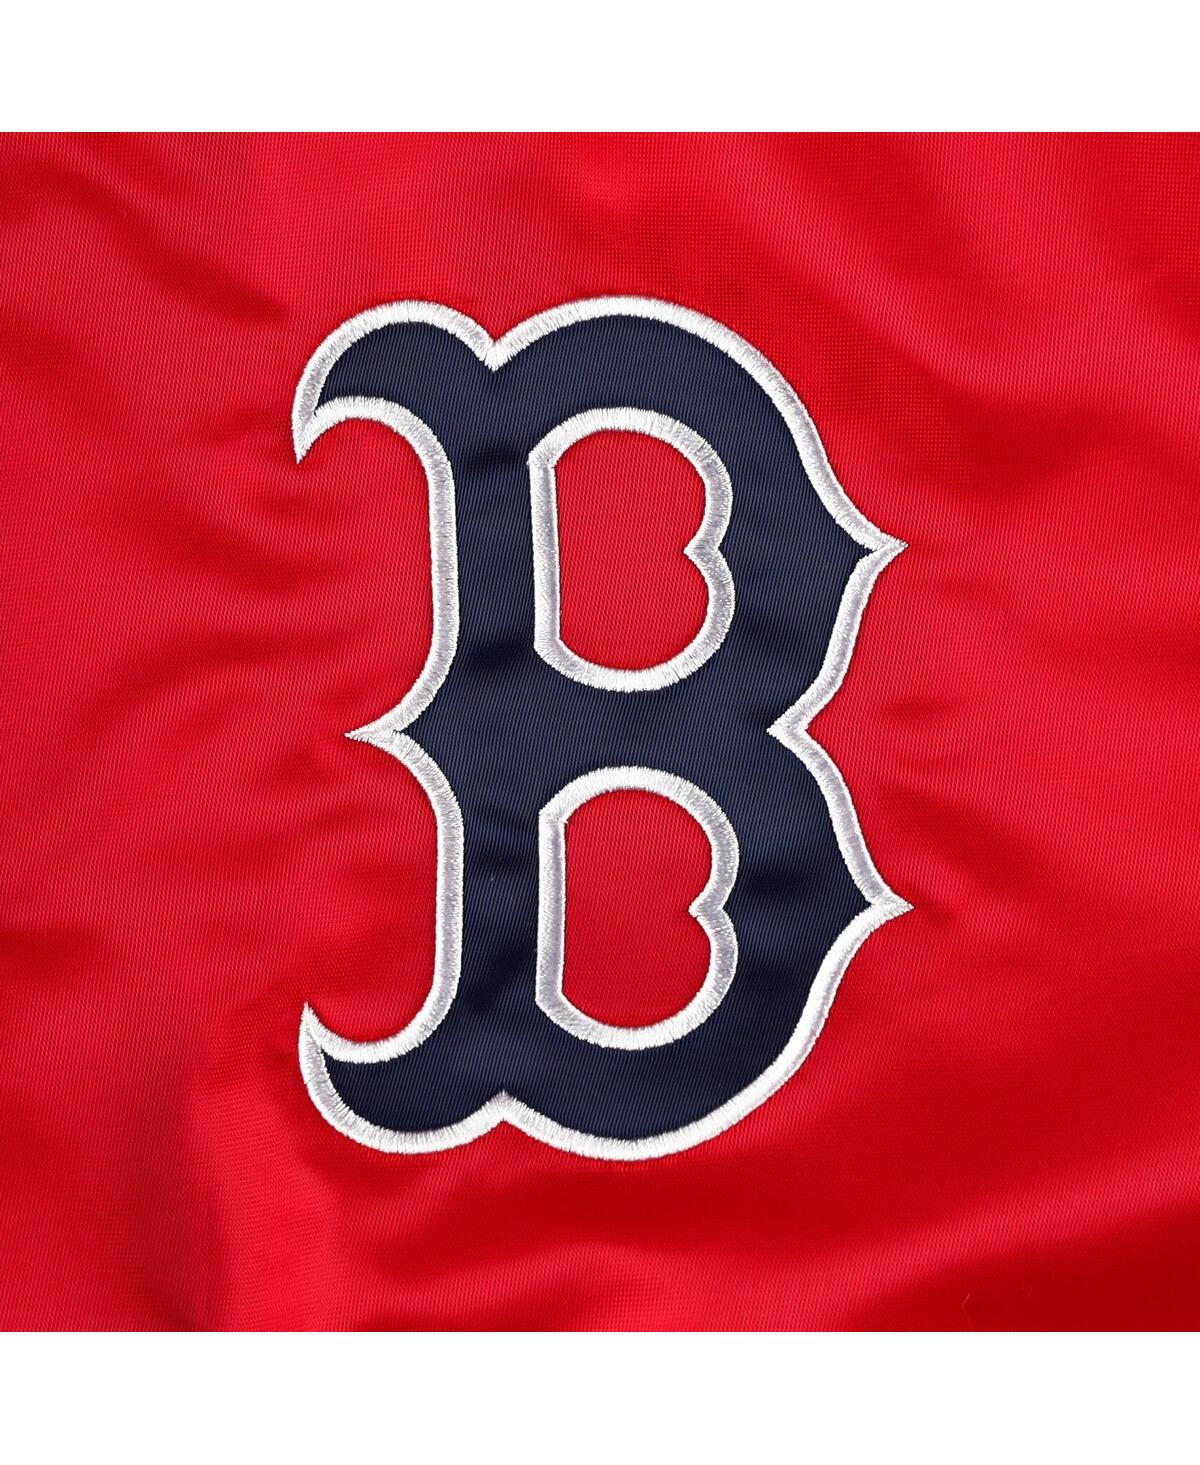 Shop Starter Men's  Red Boston Red Sox Pick And Roll Satin Varsity Full-snap Jacket